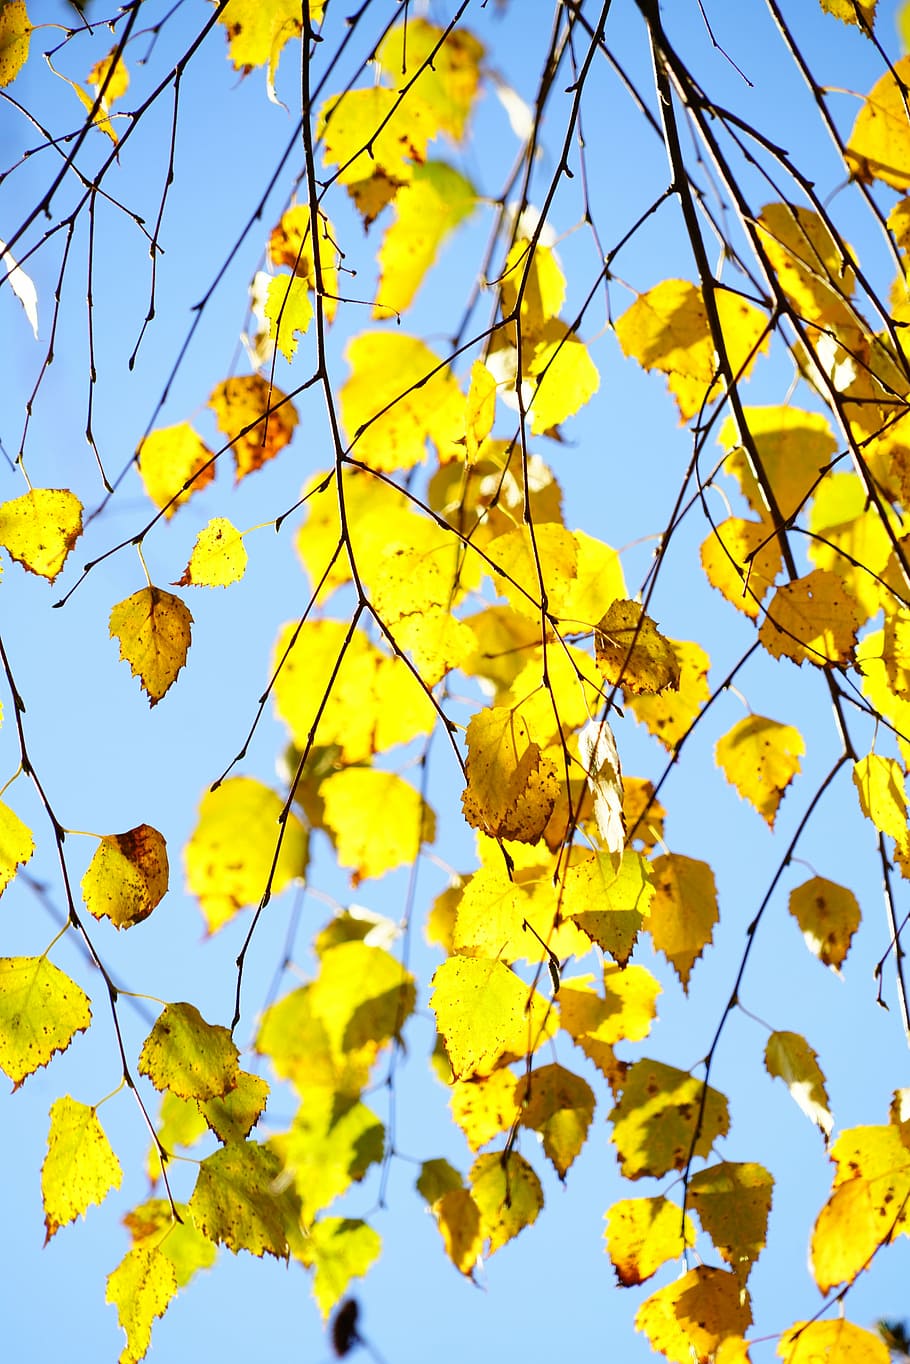 HD wallpaper: hang-birch, autumn, leaves, fall foliage, gold, yellow, bright yellow - Wallpaper Flare